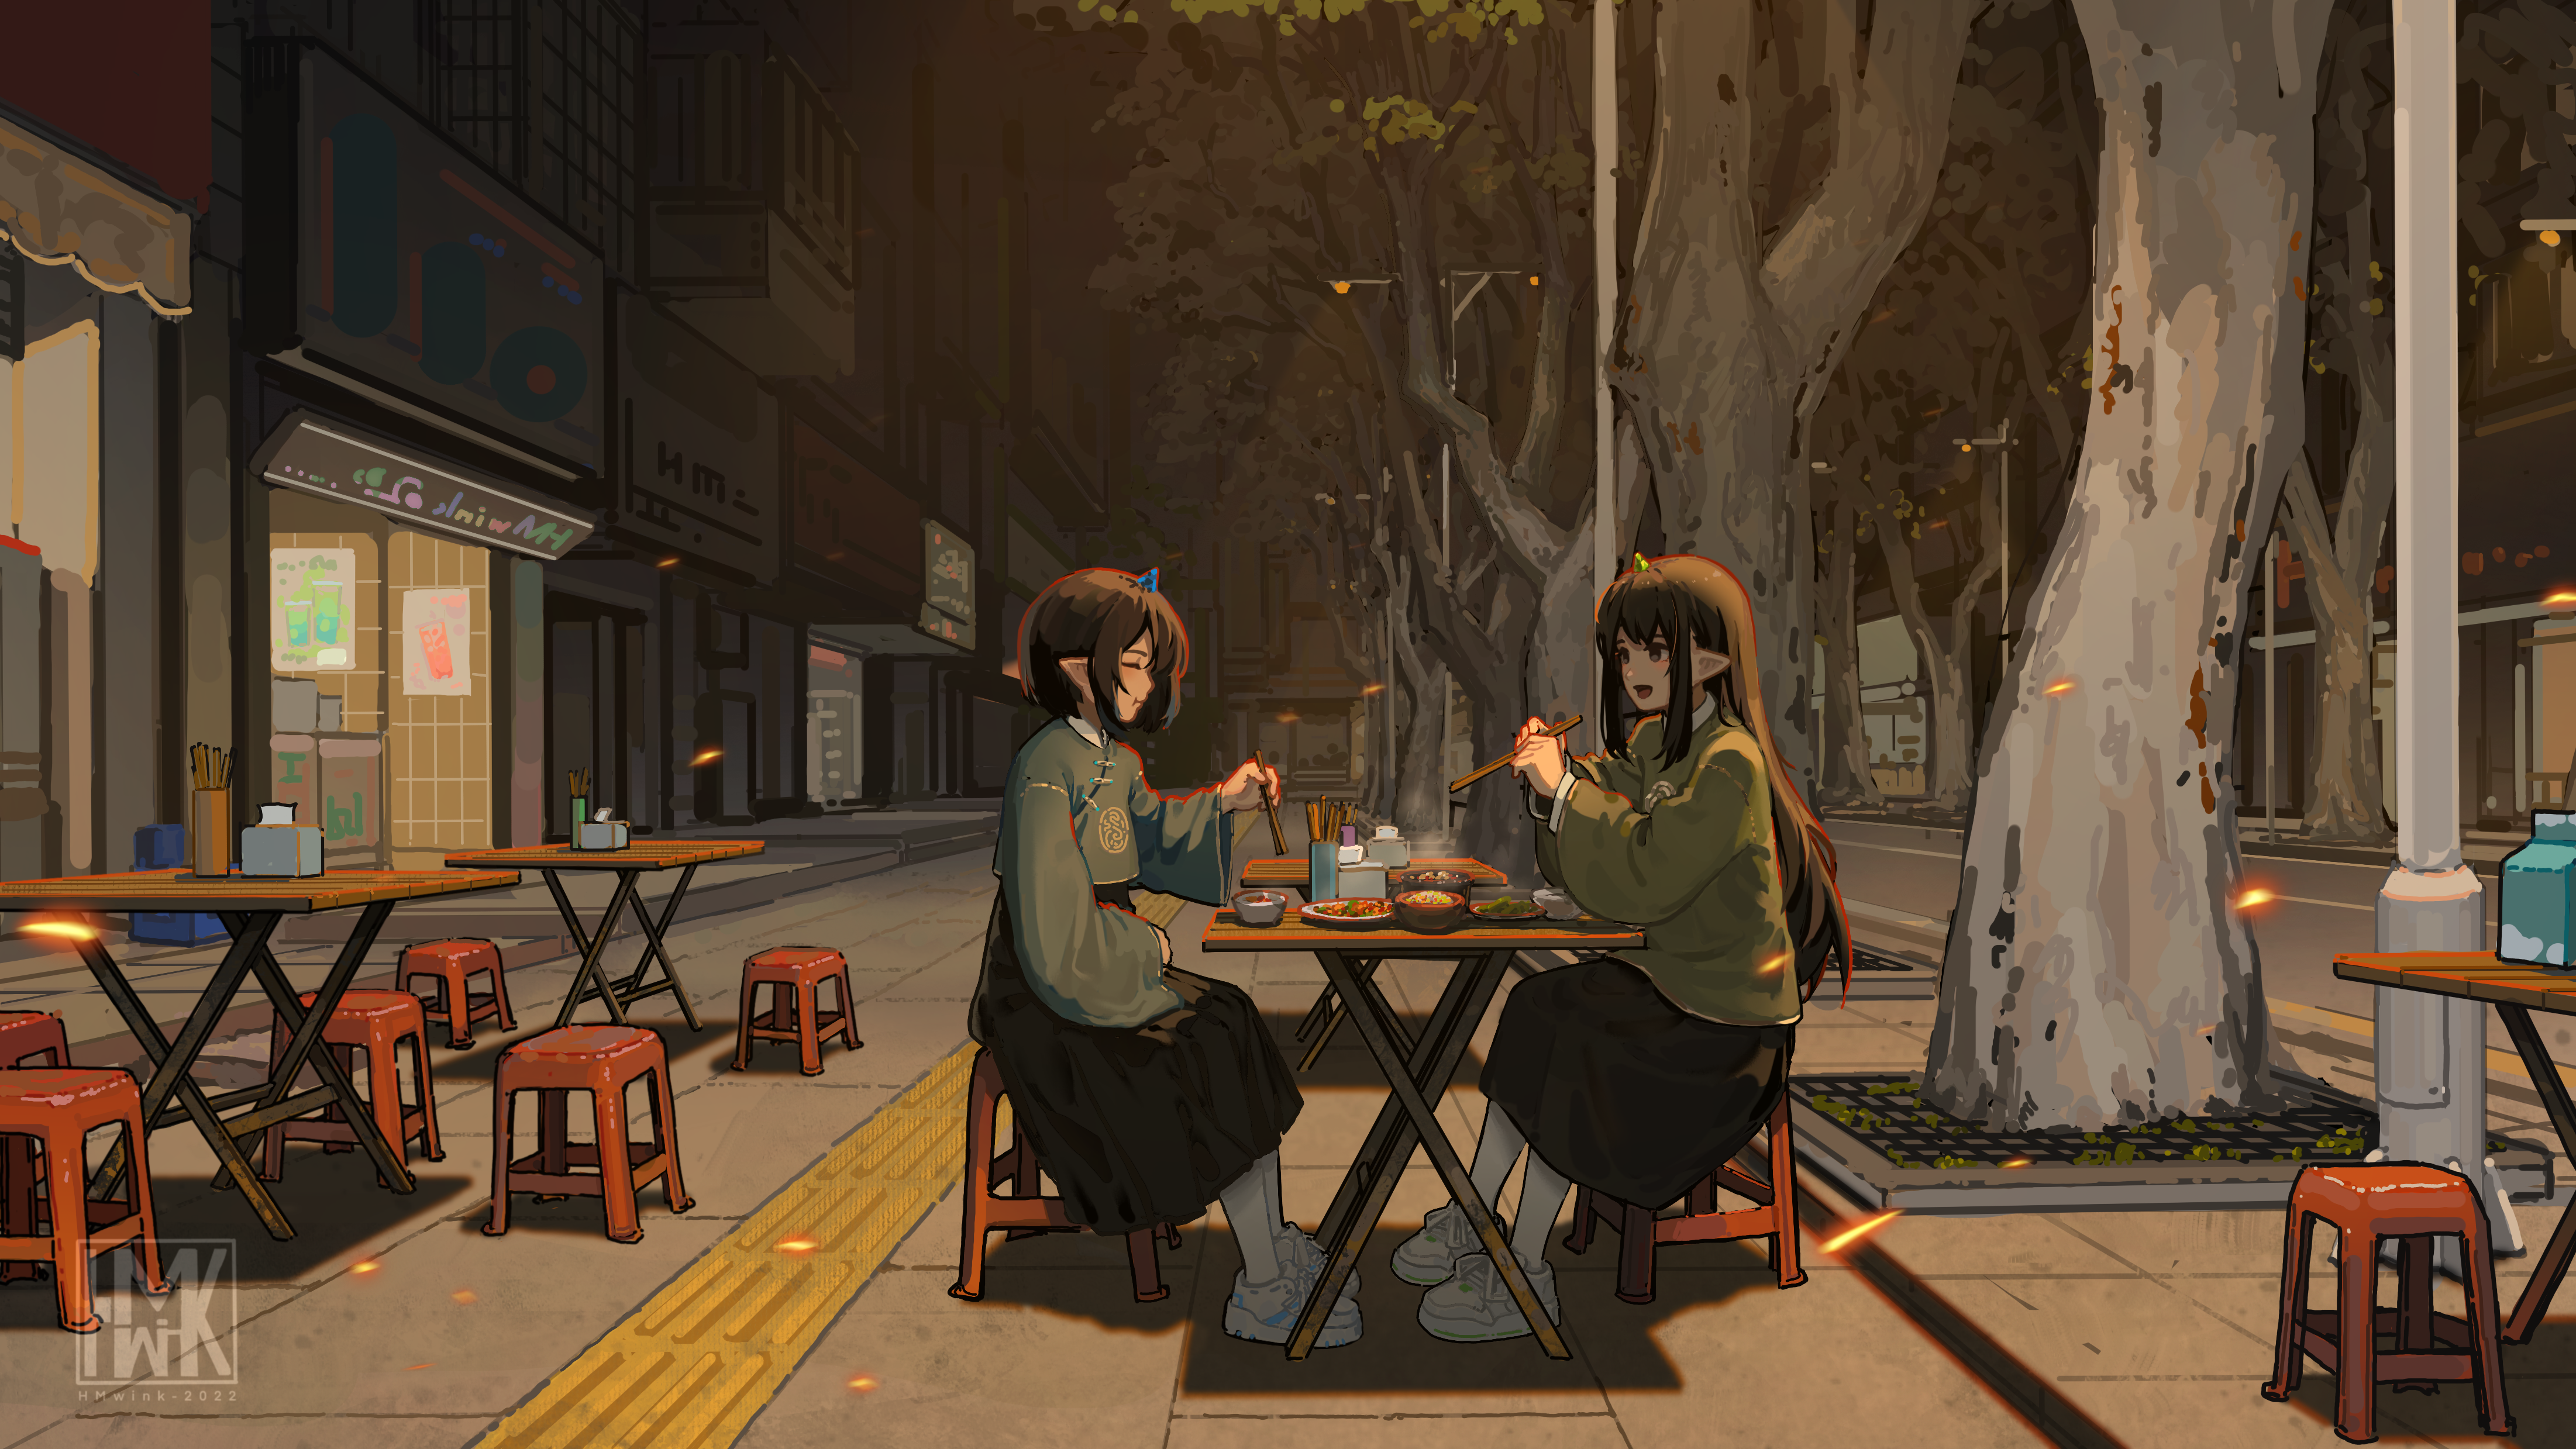 Anime 4404x2478 anime anime girls Hua Ming wink street food eating anime girls eating